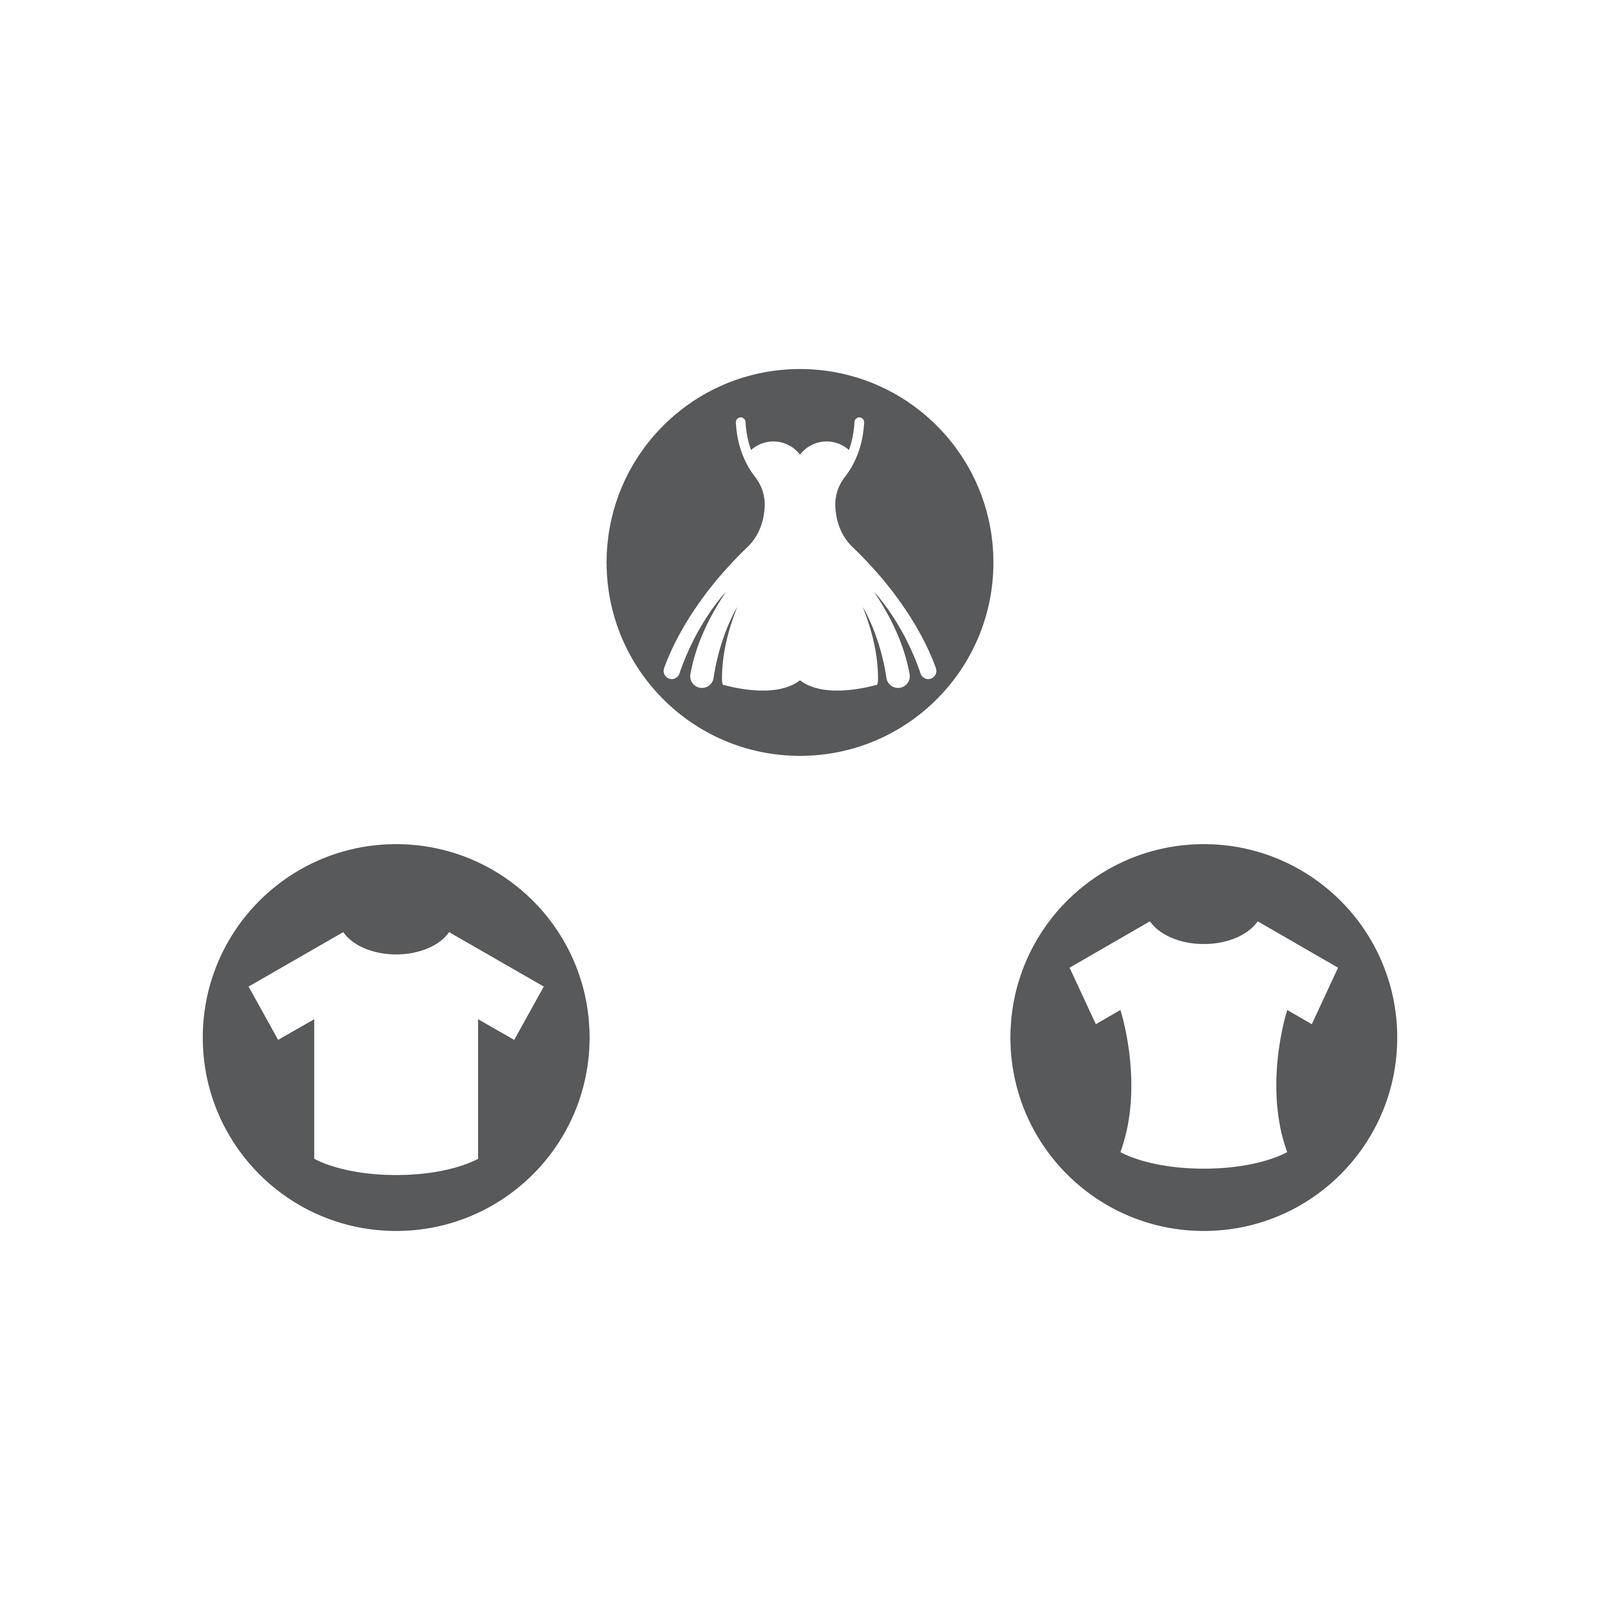 Clothing shop logo template vector icon by Attades19